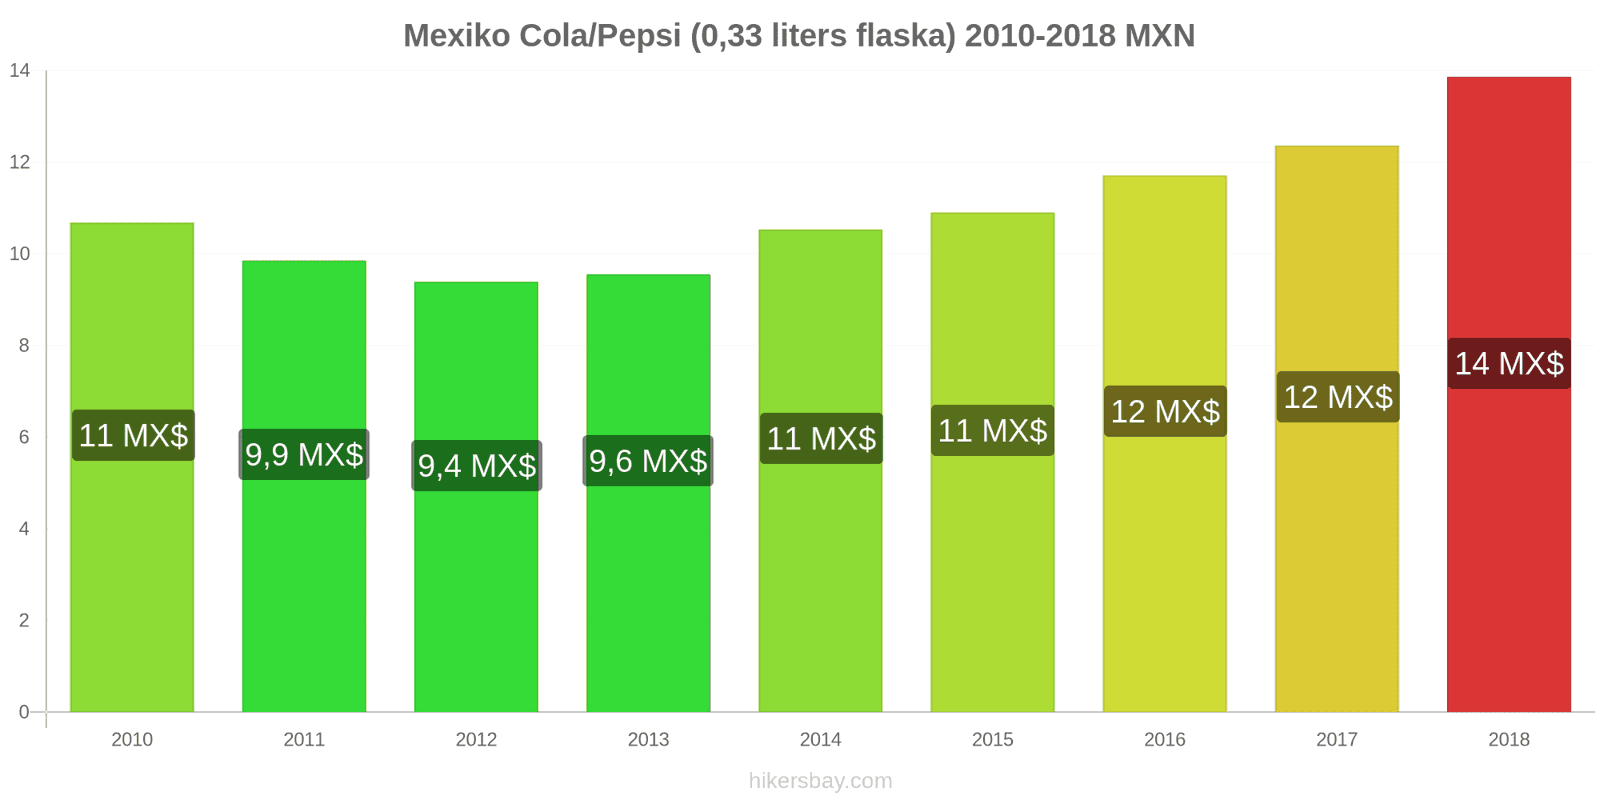 Mexiko prisändringar Coca-Cola/Pepsi (0.33 liters flaska) hikersbay.com